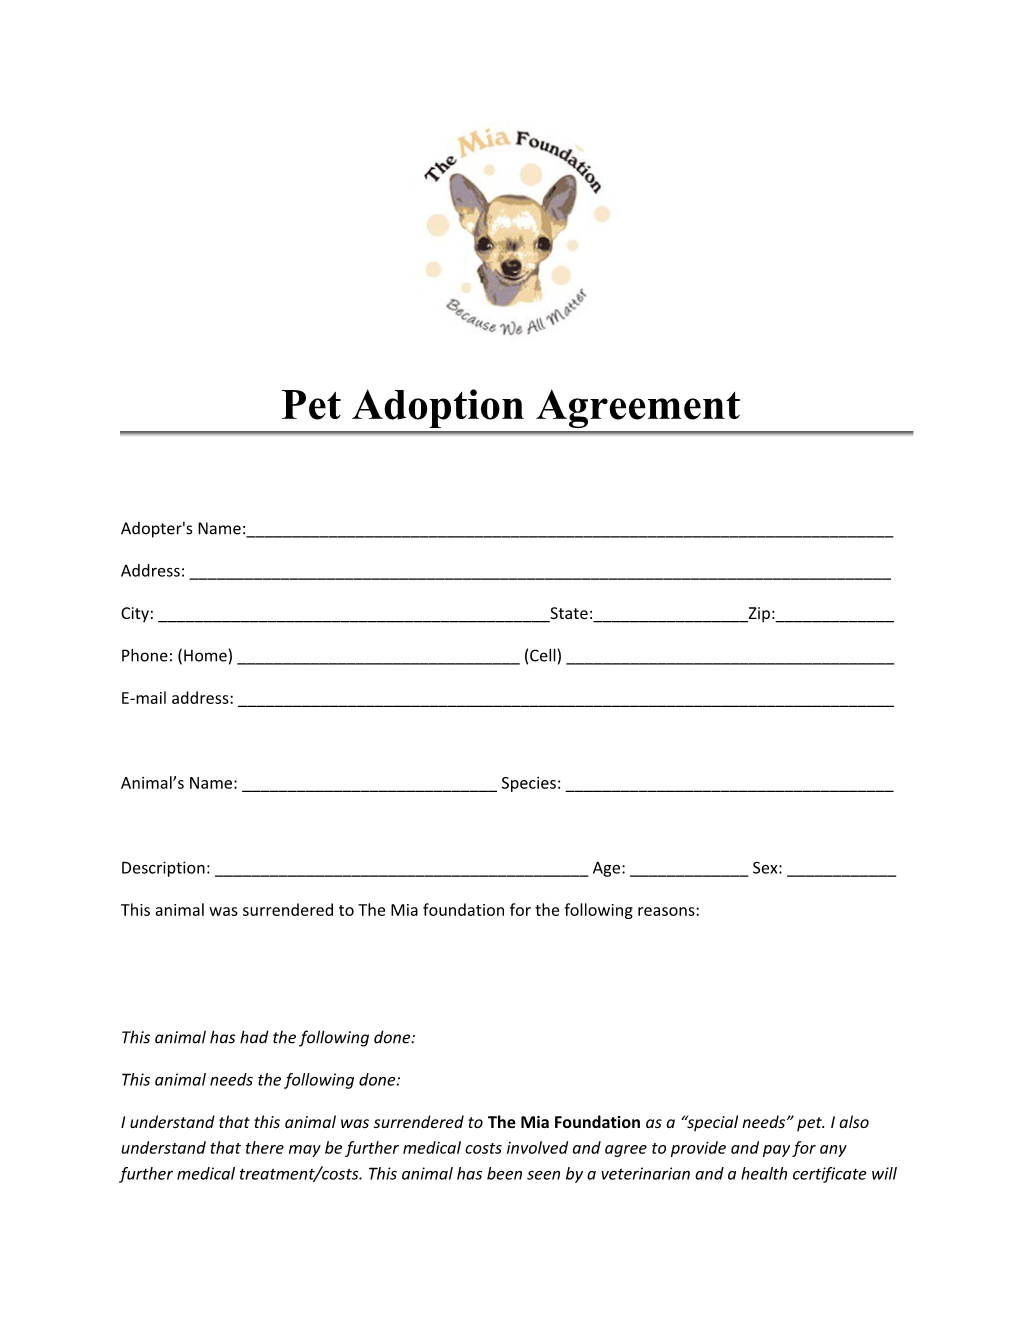 Pet Adoption Agreement